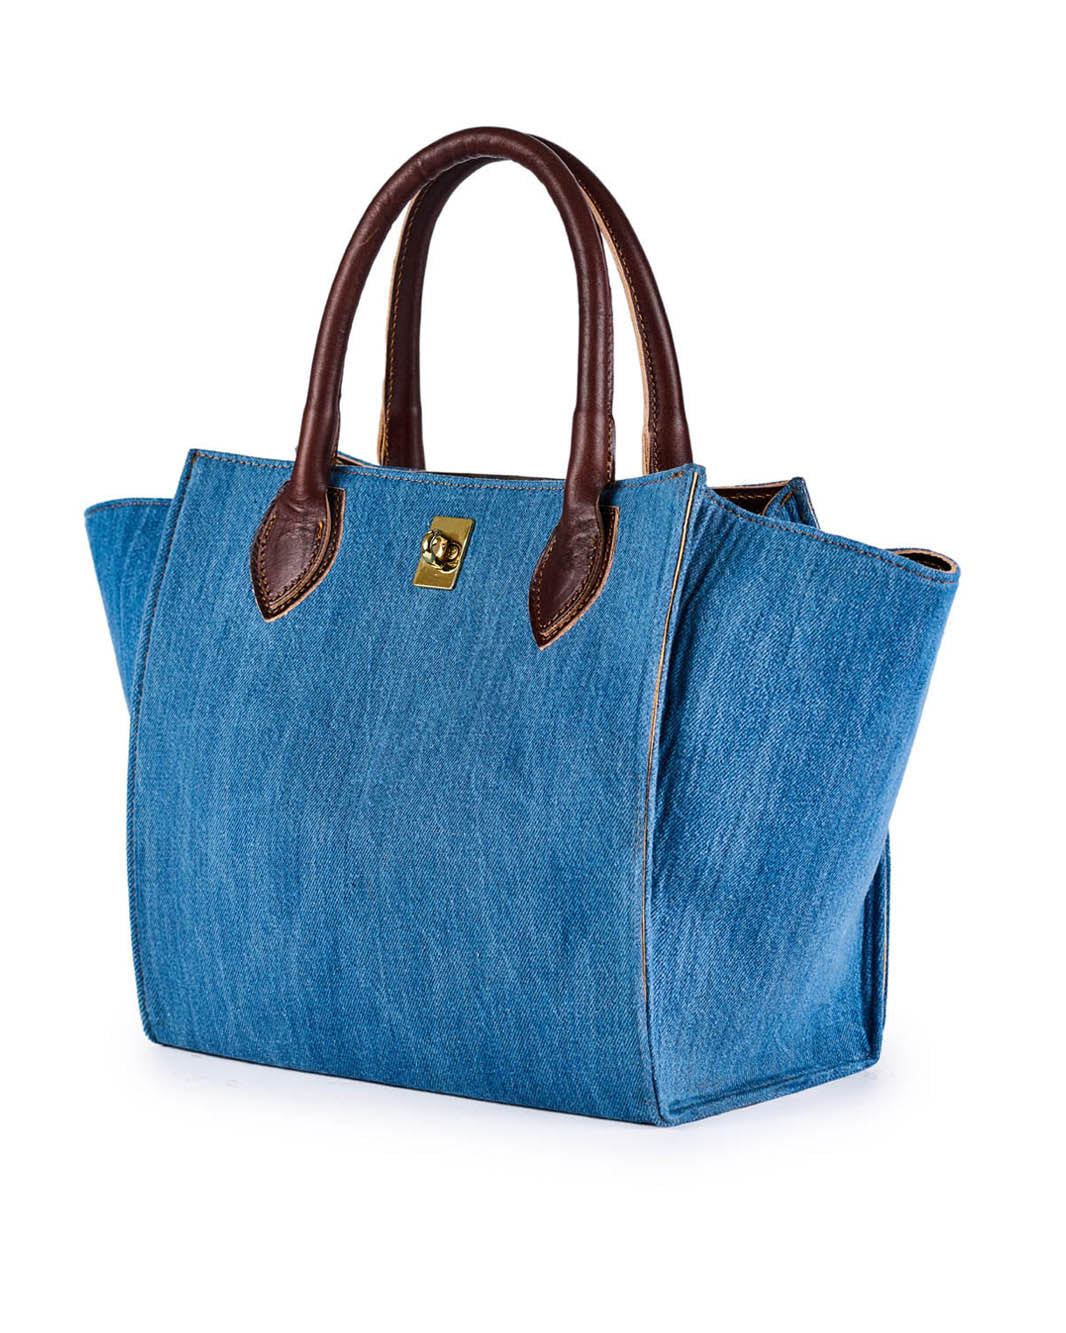 Blue denim handbag with brown leather handles